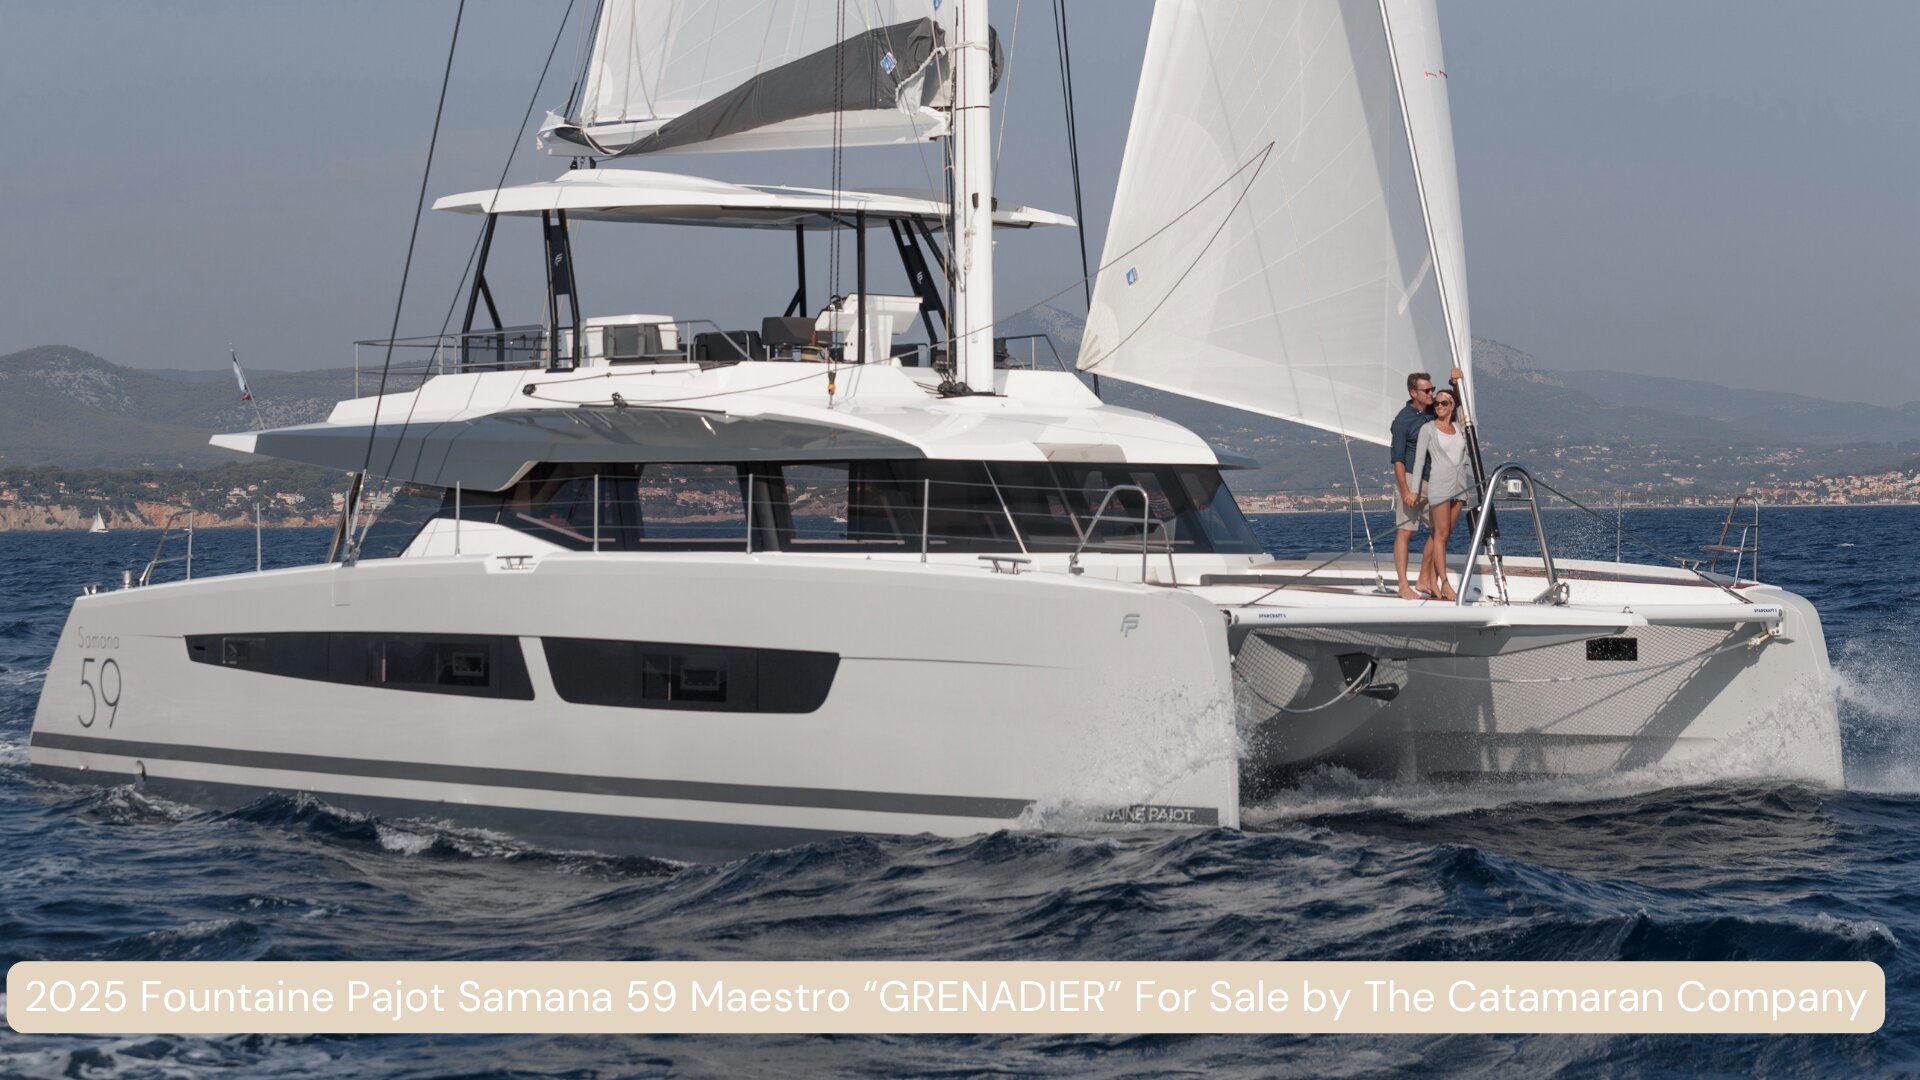 New Sail Catamaran for sale GRENADIER 2025 FOUNTAINE PAJOT Samana 59 Maestro